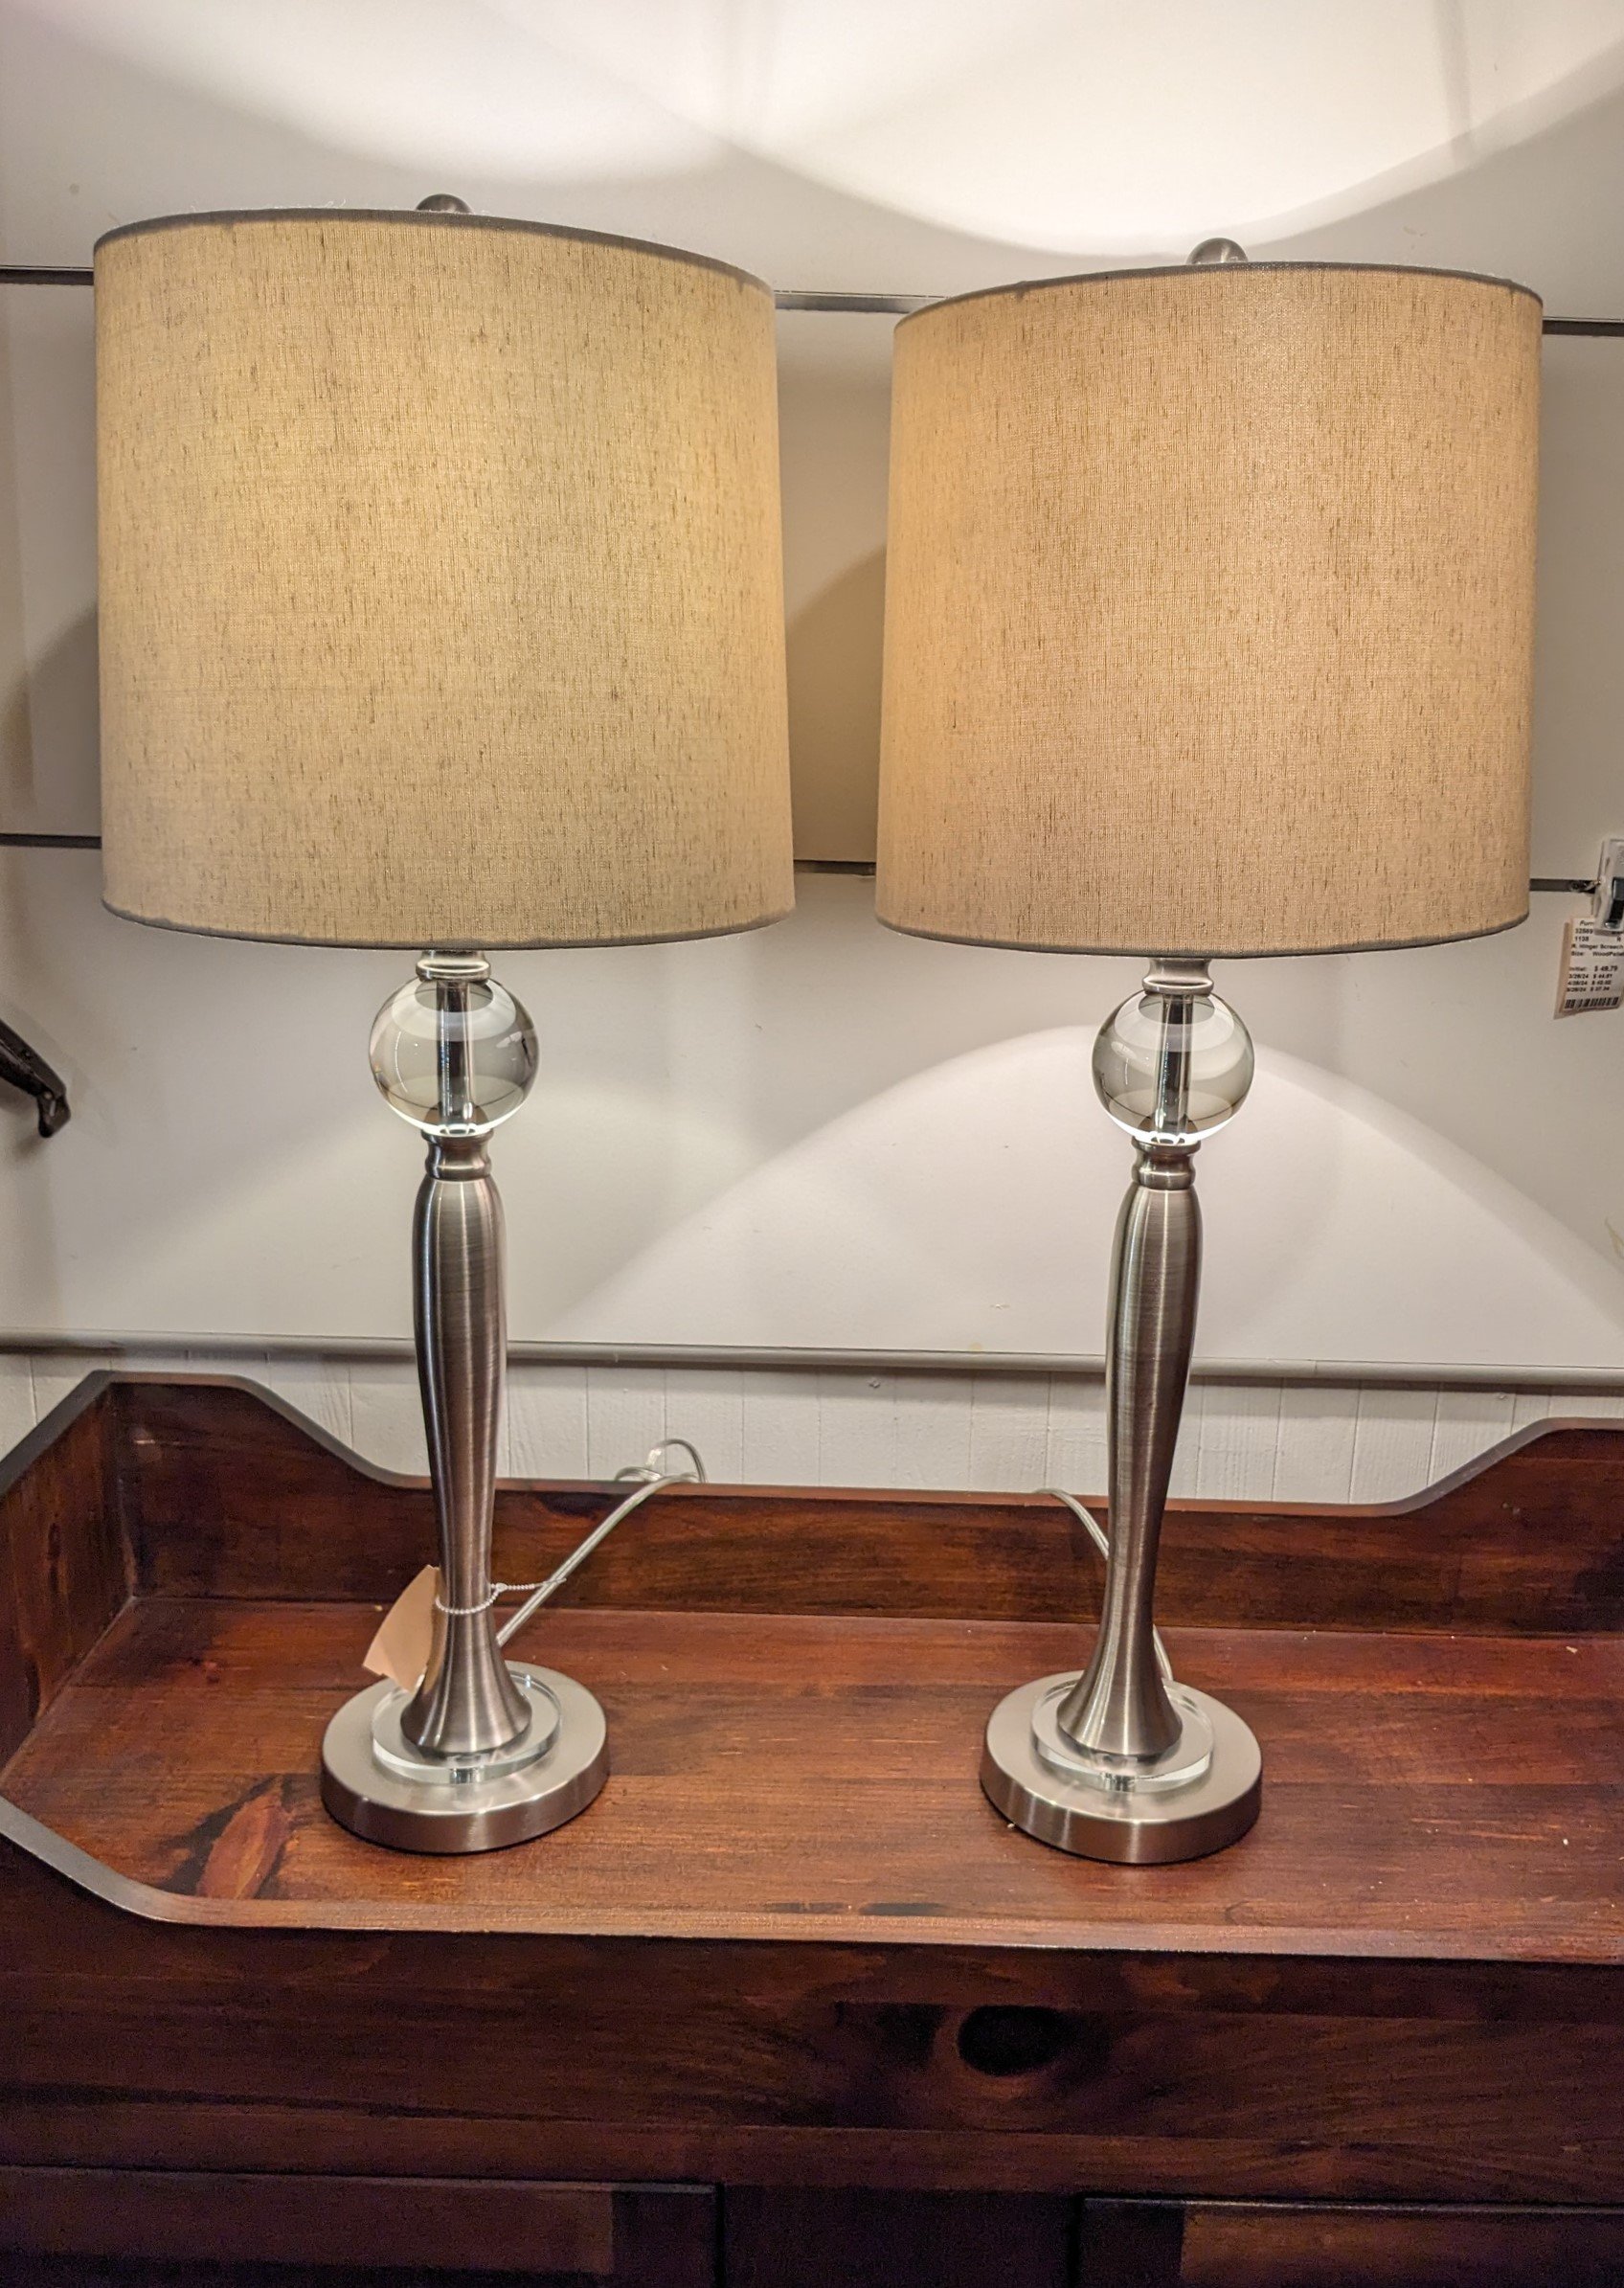 Pair Brushed Nickel Table Lamps